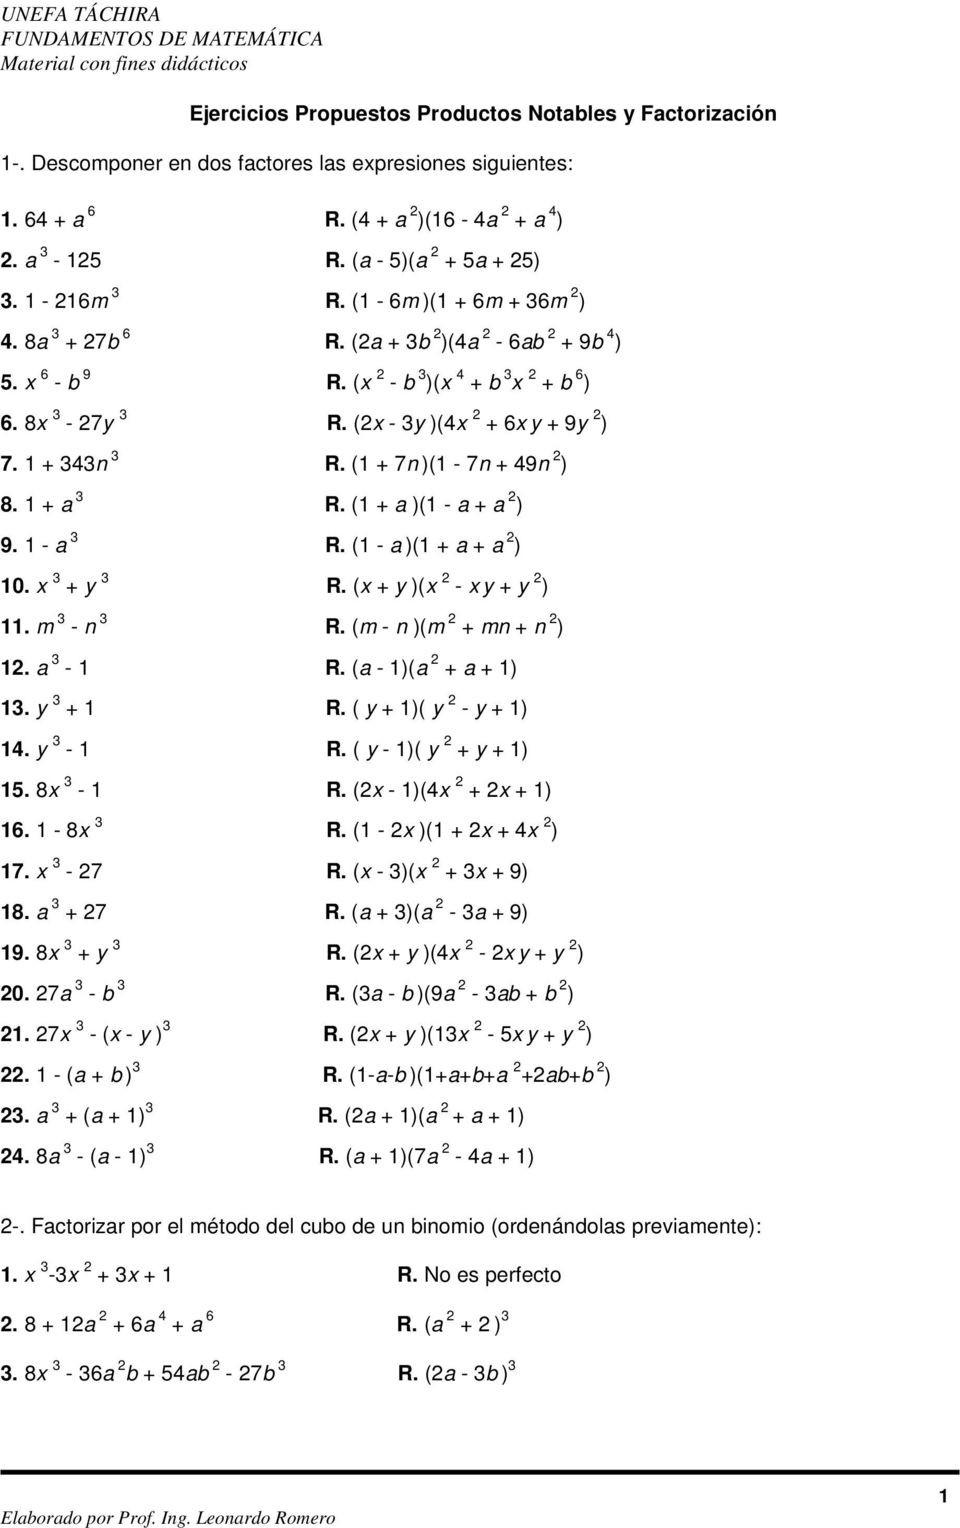 (1 + a )(1 - a + a ) 9. 1 - a R. (1 - a )(1 + a + a ) 10. x + y R. (x + y )(x - x y + y ) 11. m - n R. (m - n )(m + mn + n ) 1. a - 1 R. (a - 1)(a + a + 1) 1. y + 1 R. ( y + 1)( y - y + 1) 14.